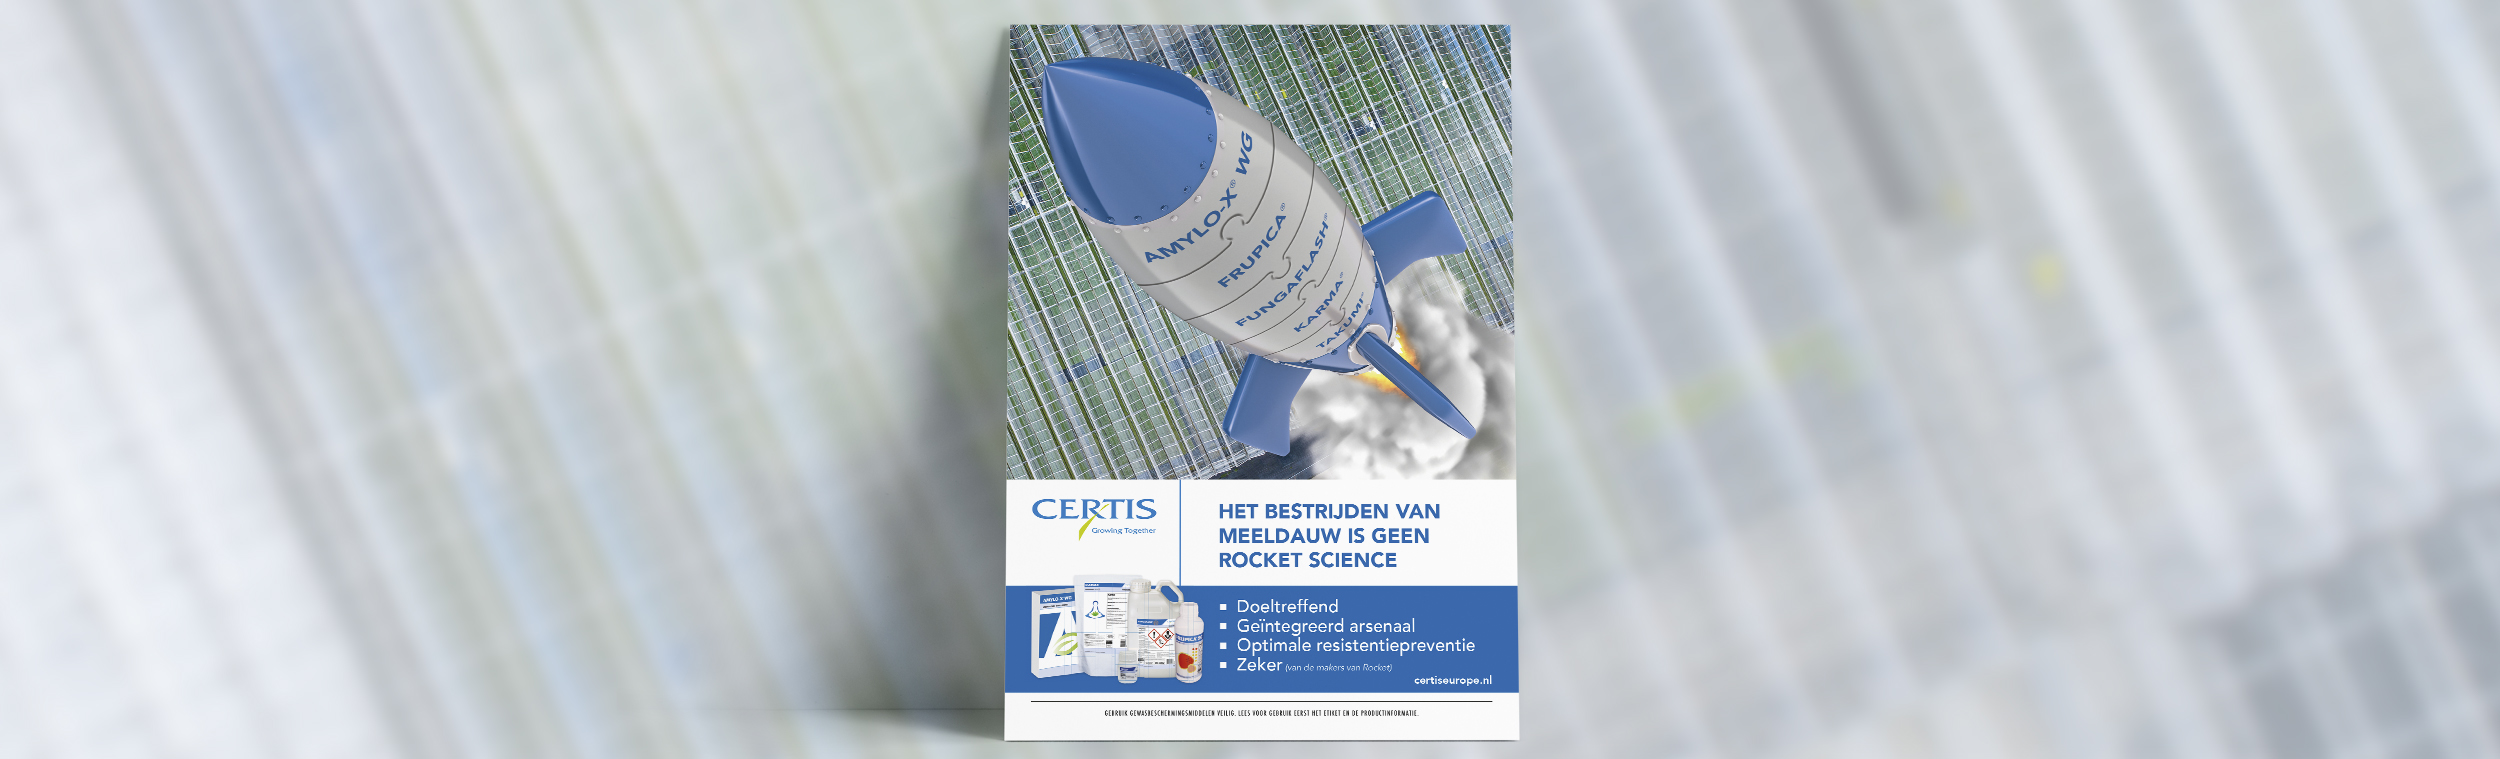 portfolio - certis_rocketscience_advertentie